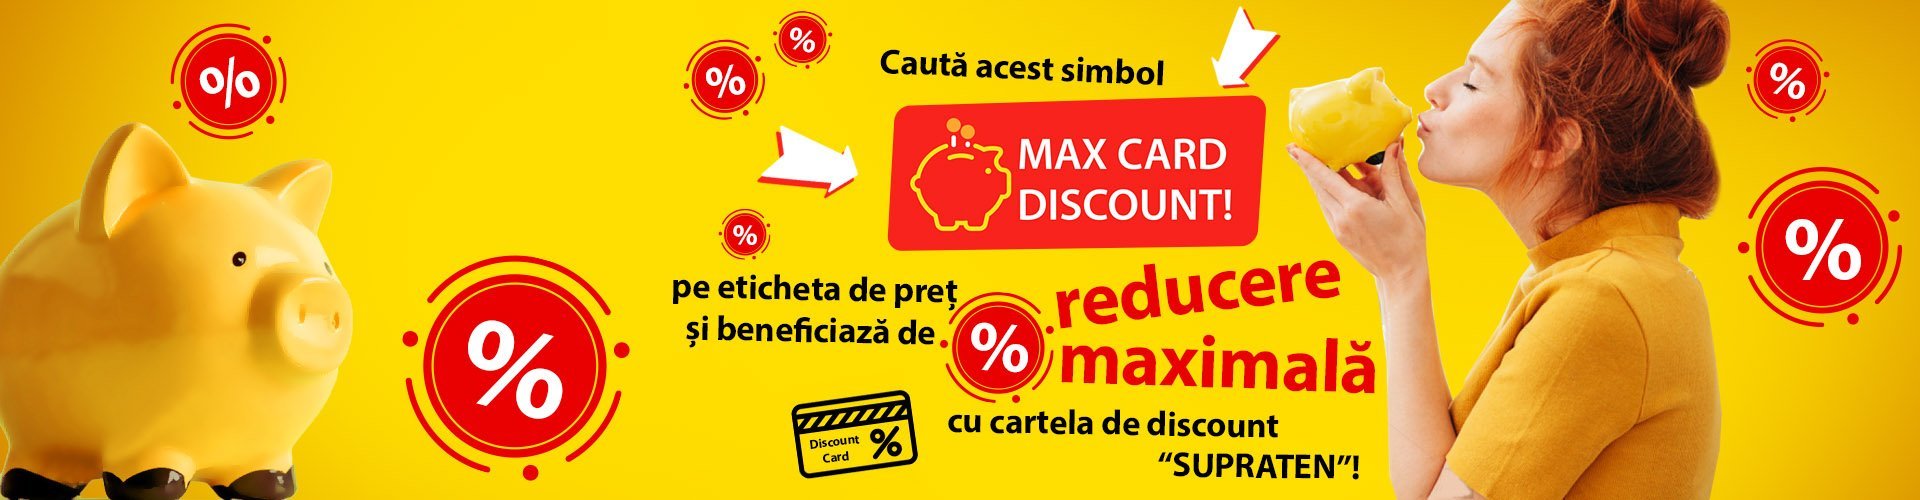 Max Card Discount